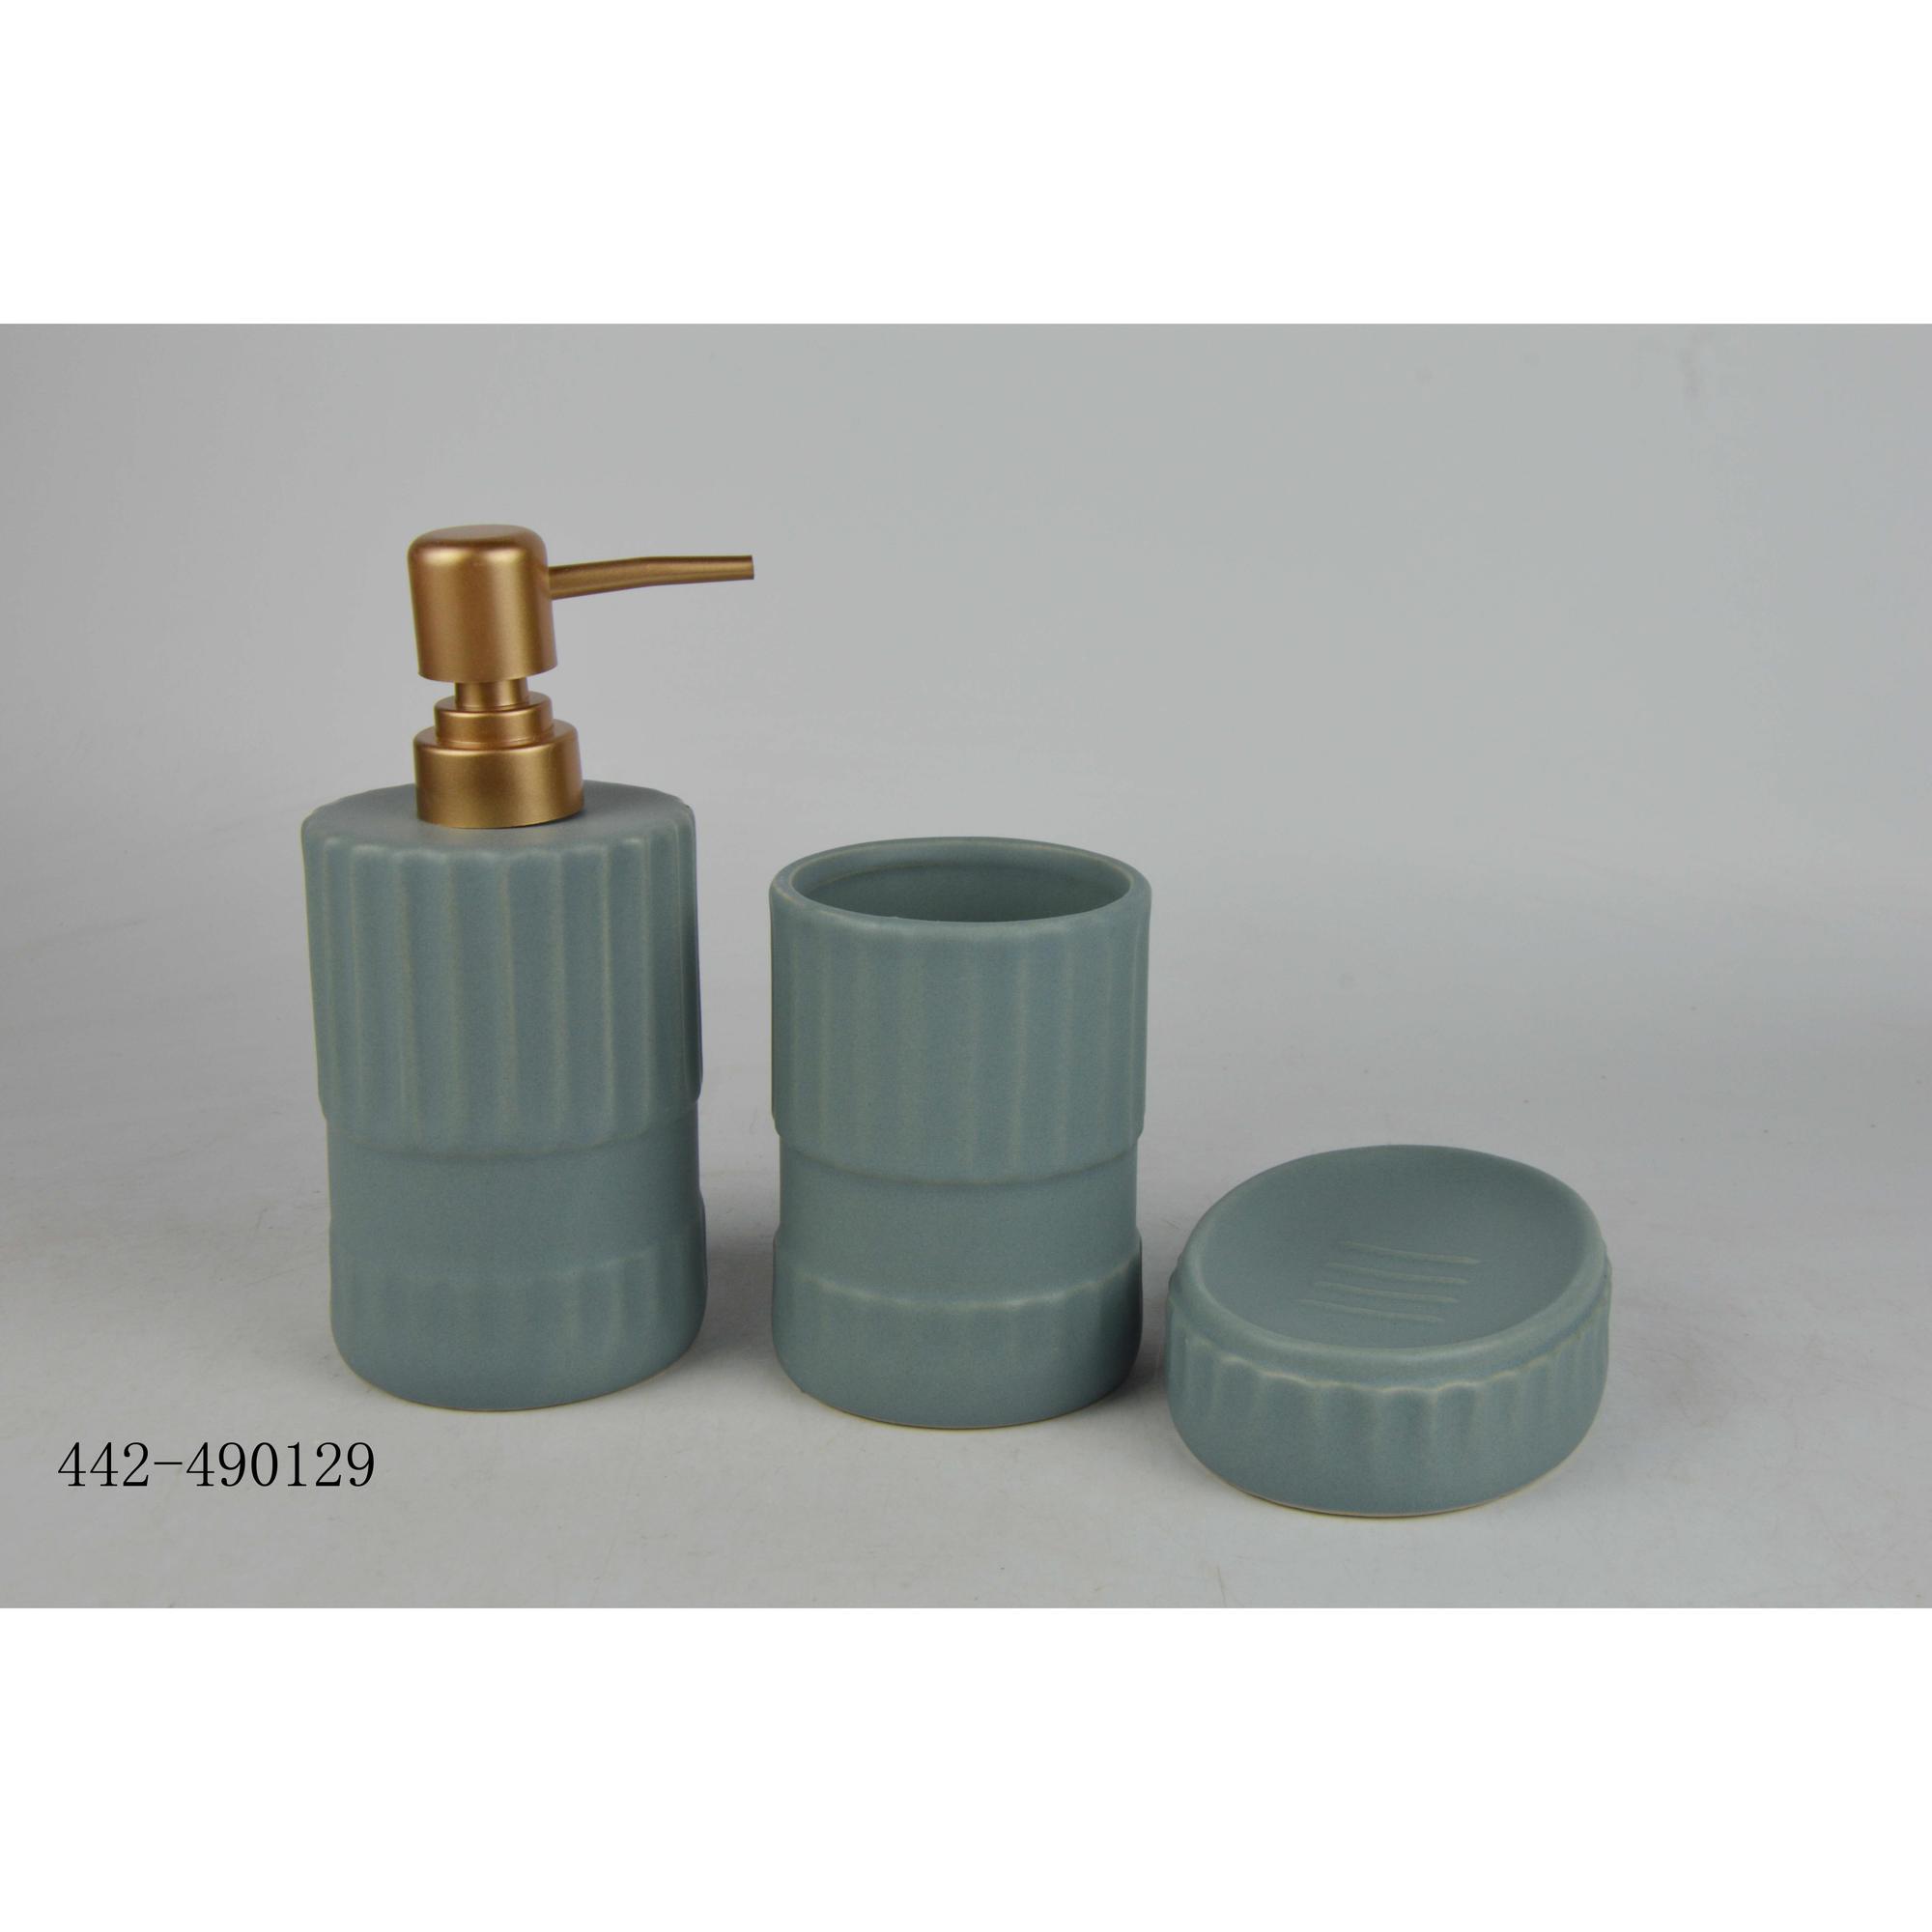 S/3 BATHROOM (soap dispensersoap dish tumbler) - 442-490129